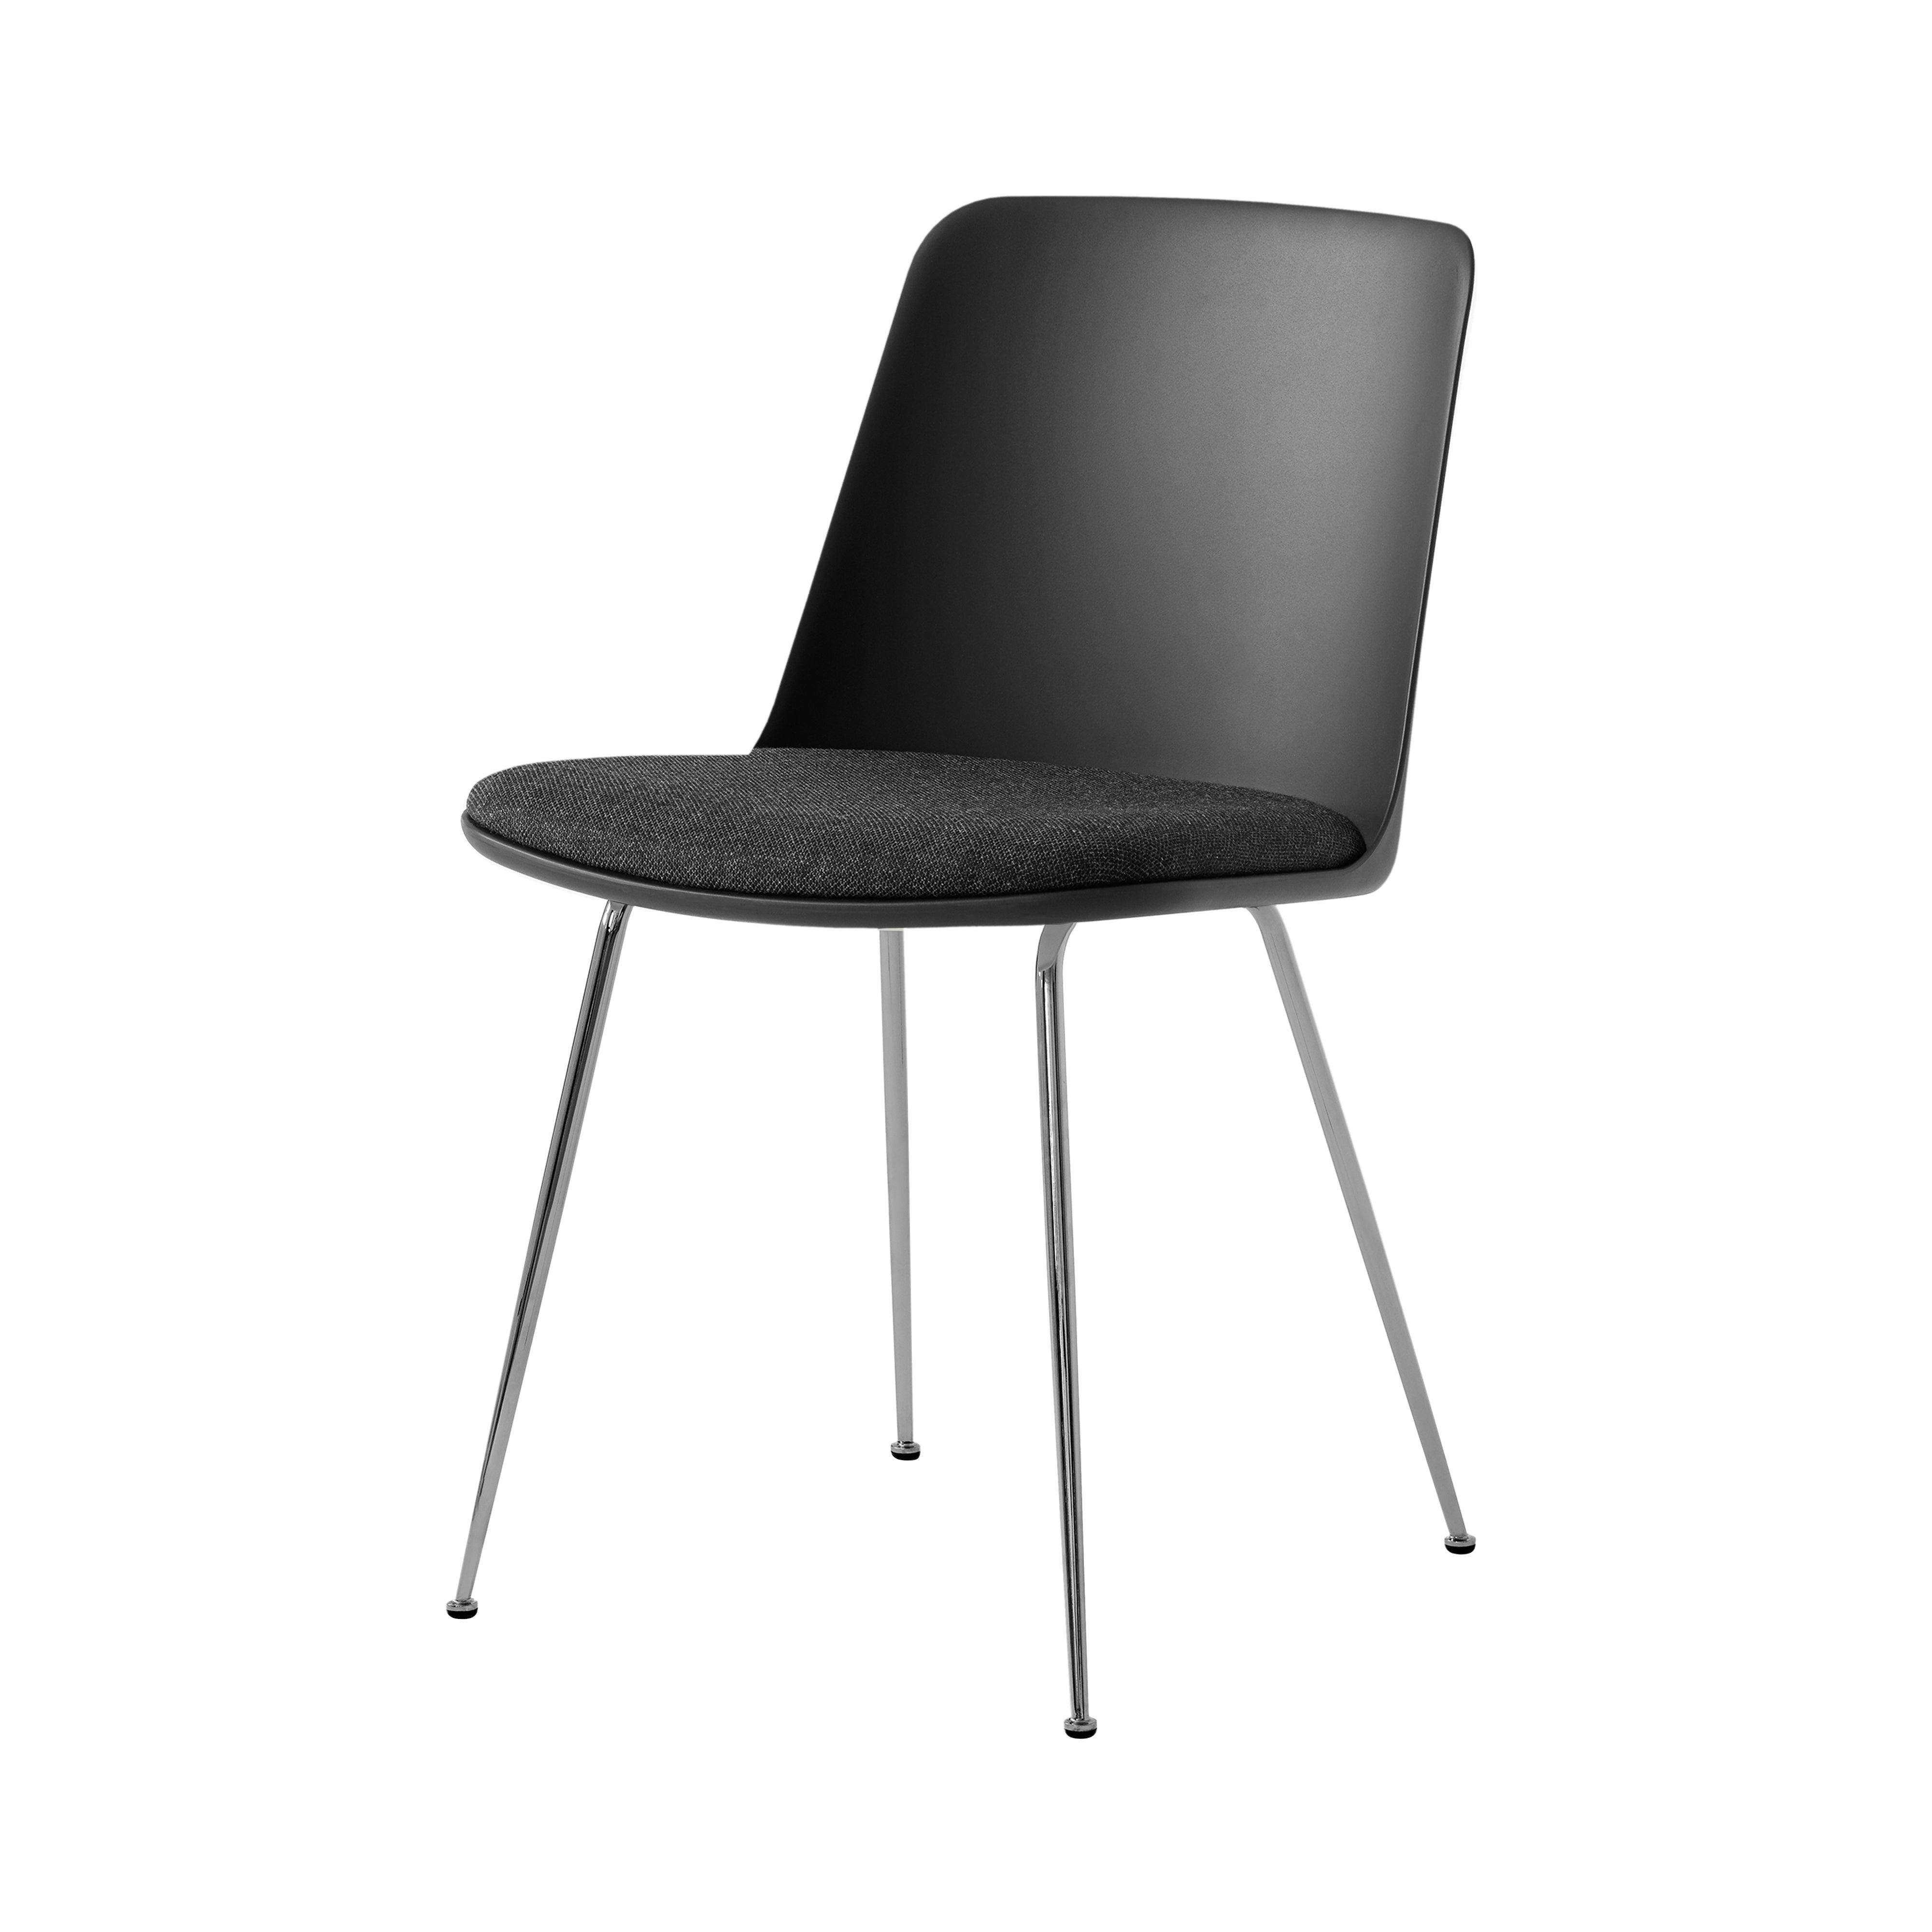 Rely Chair HW7: Chrome Base + Black